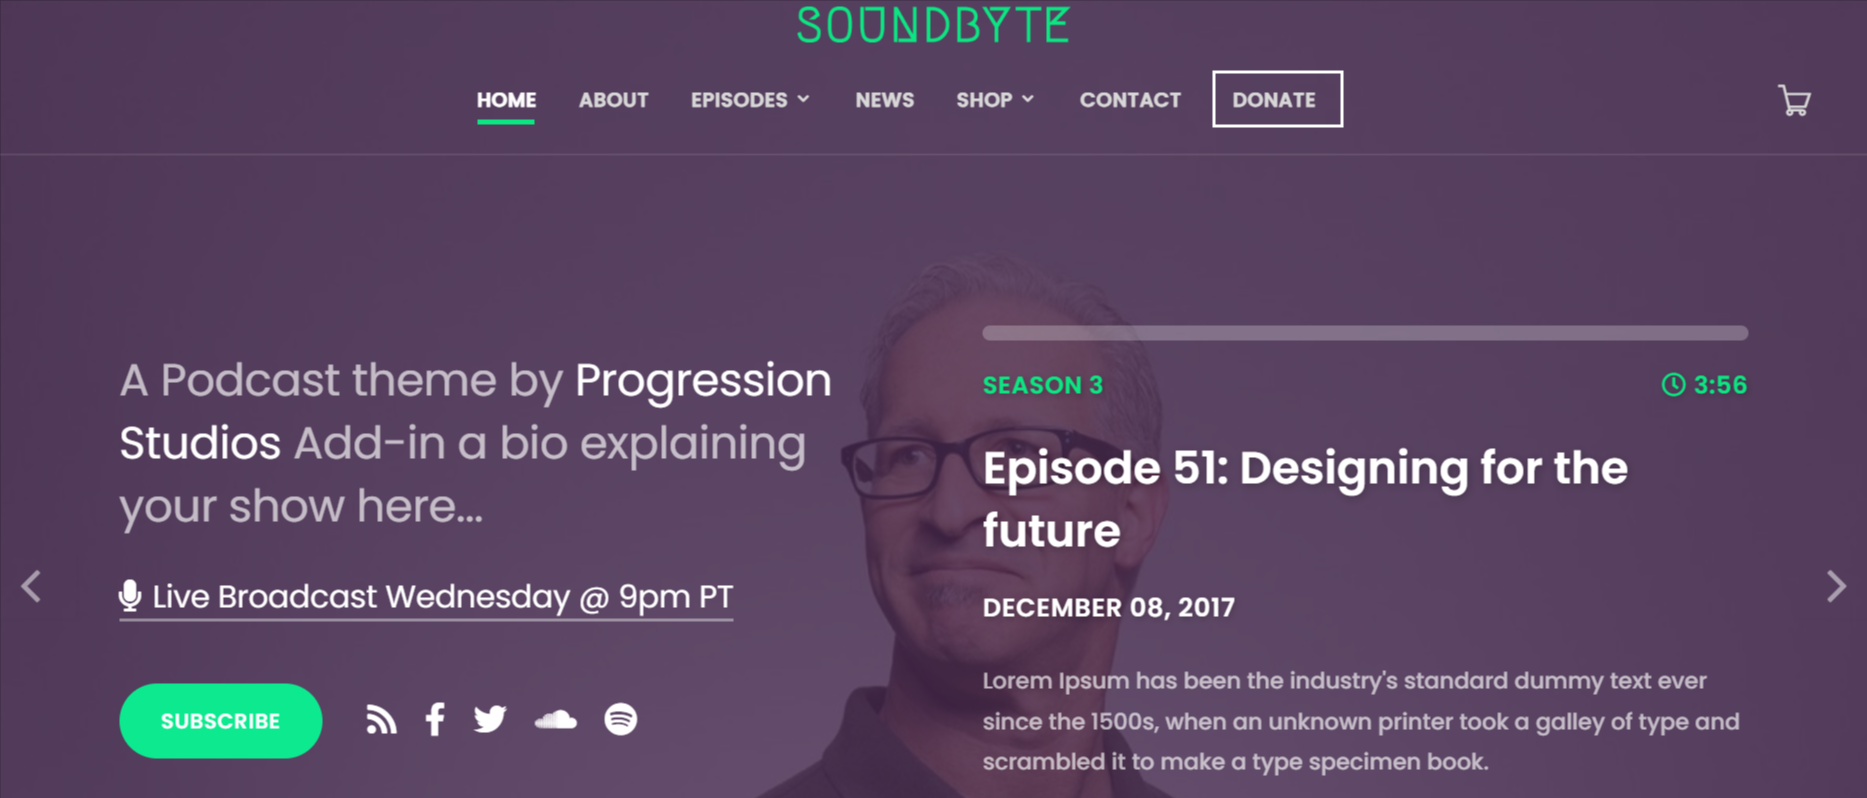 Soundbyte - Best WordPress Podcast Themes for Podcasters